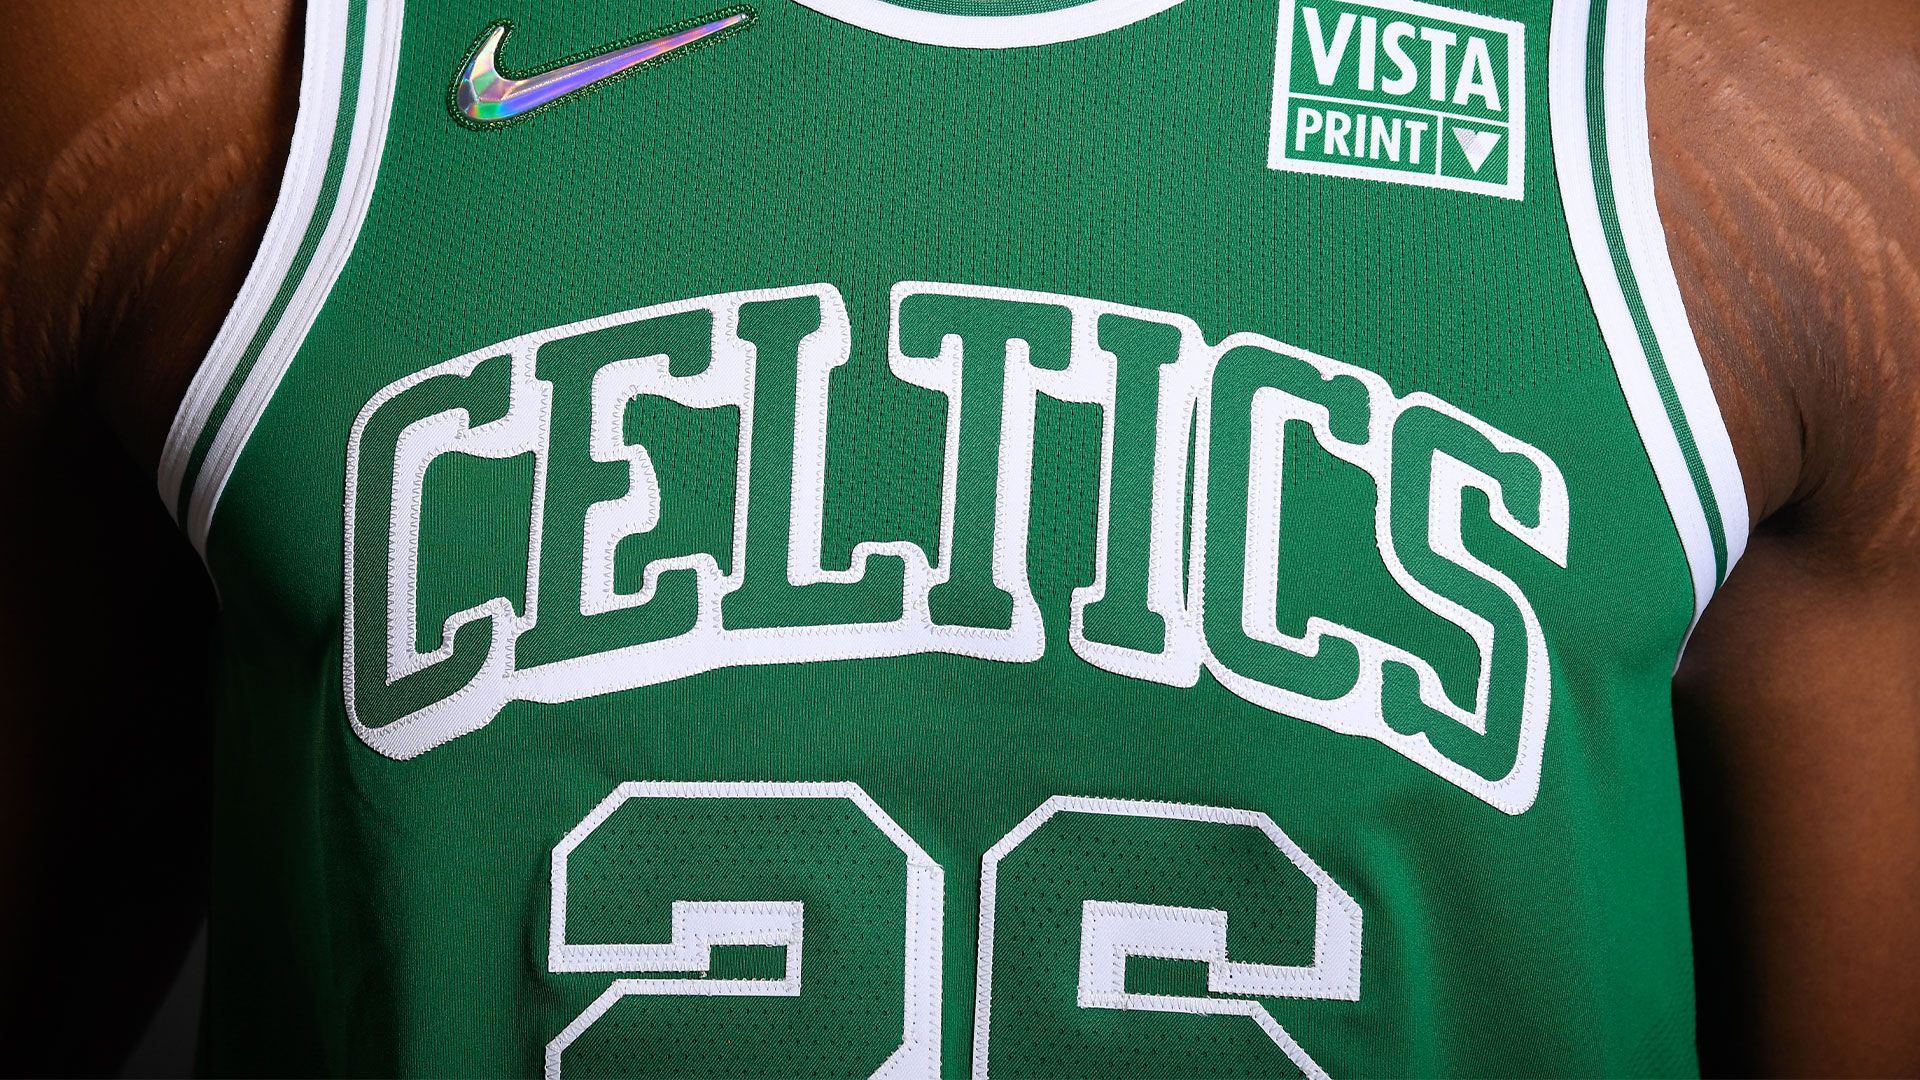 Boston Celtics City Edition Jerseys, Celtics City Apparel